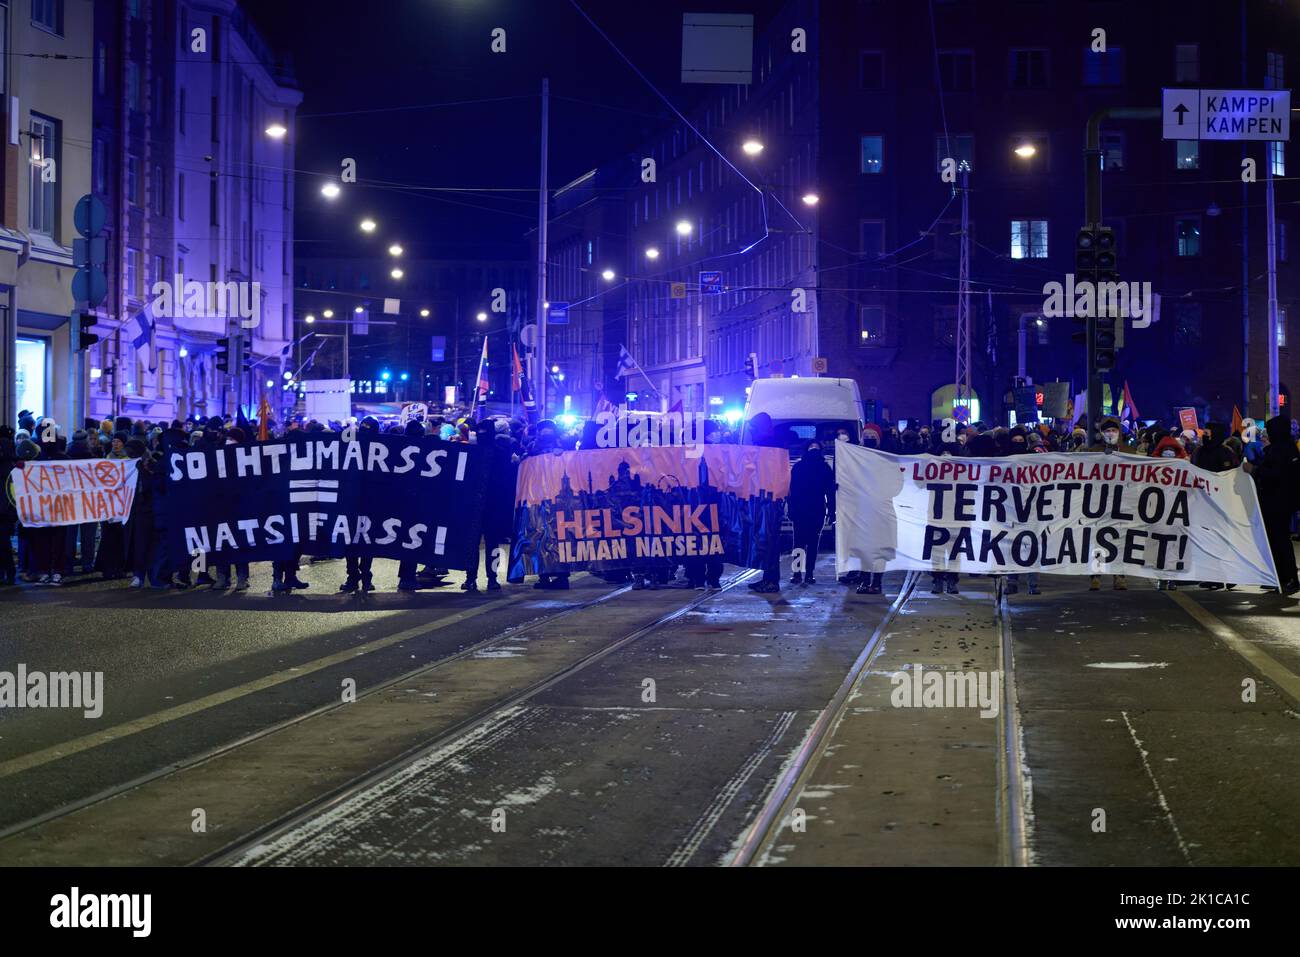 Helsinki, Finland - December 6, 2021: The demonstrators of the left-wing anti-fascist Helsinki ilman natseja (Helsinki without Nazis) procession / cou Stock Photo